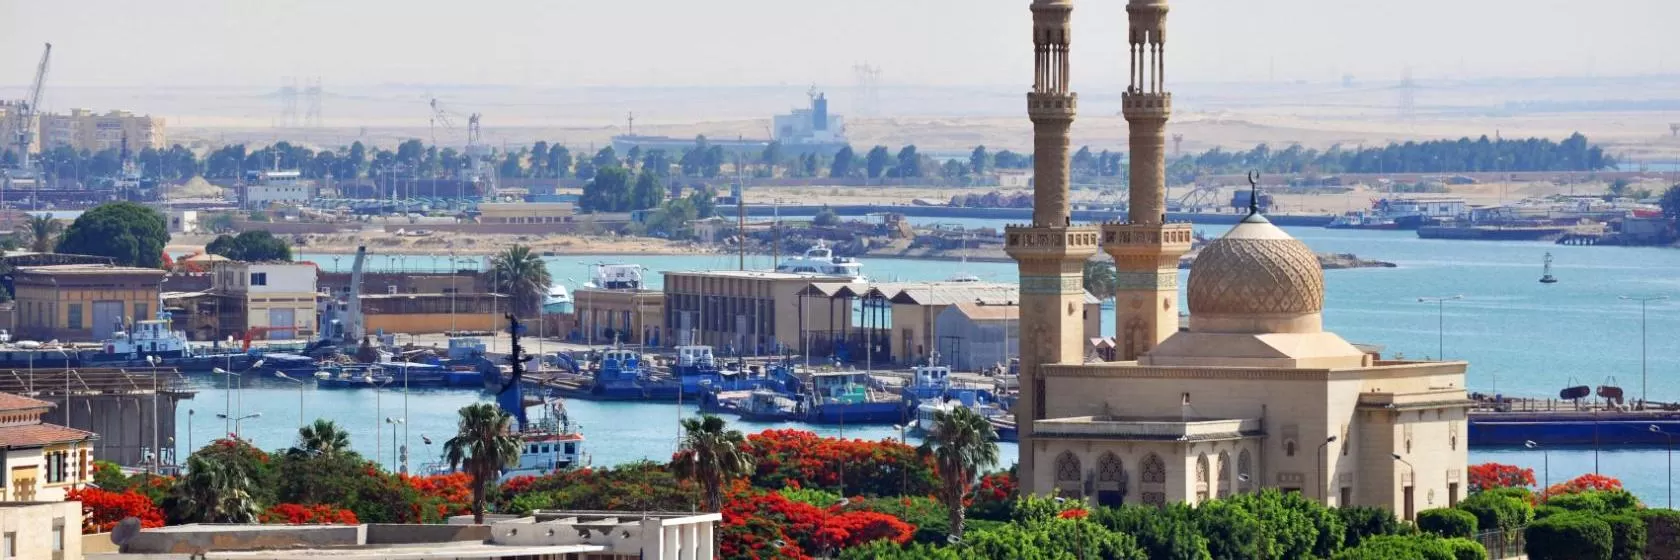 Port Said Hotels & Accommodation